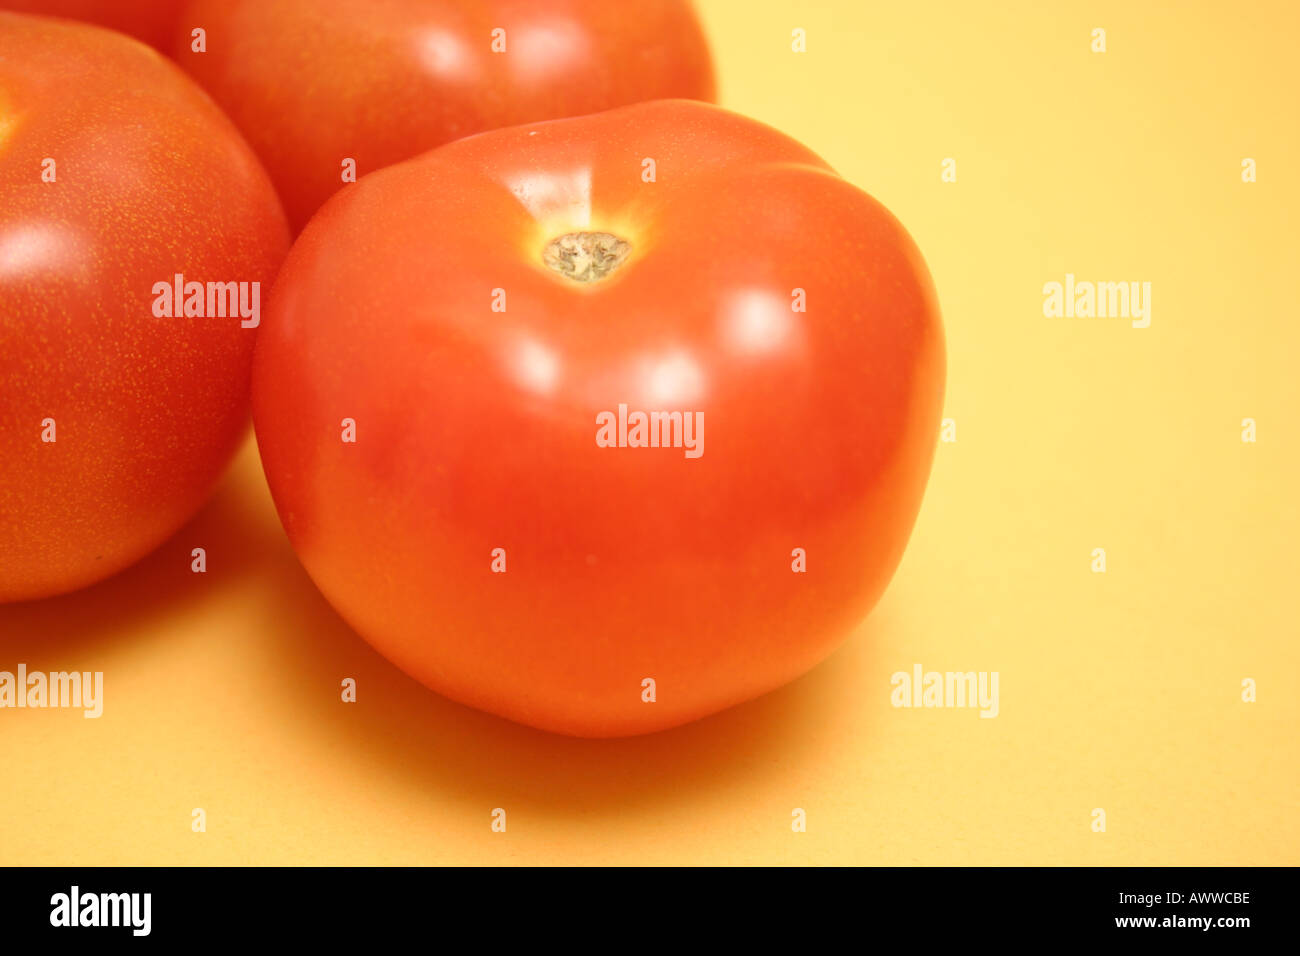 tomato close up on yellow background Stock Photo